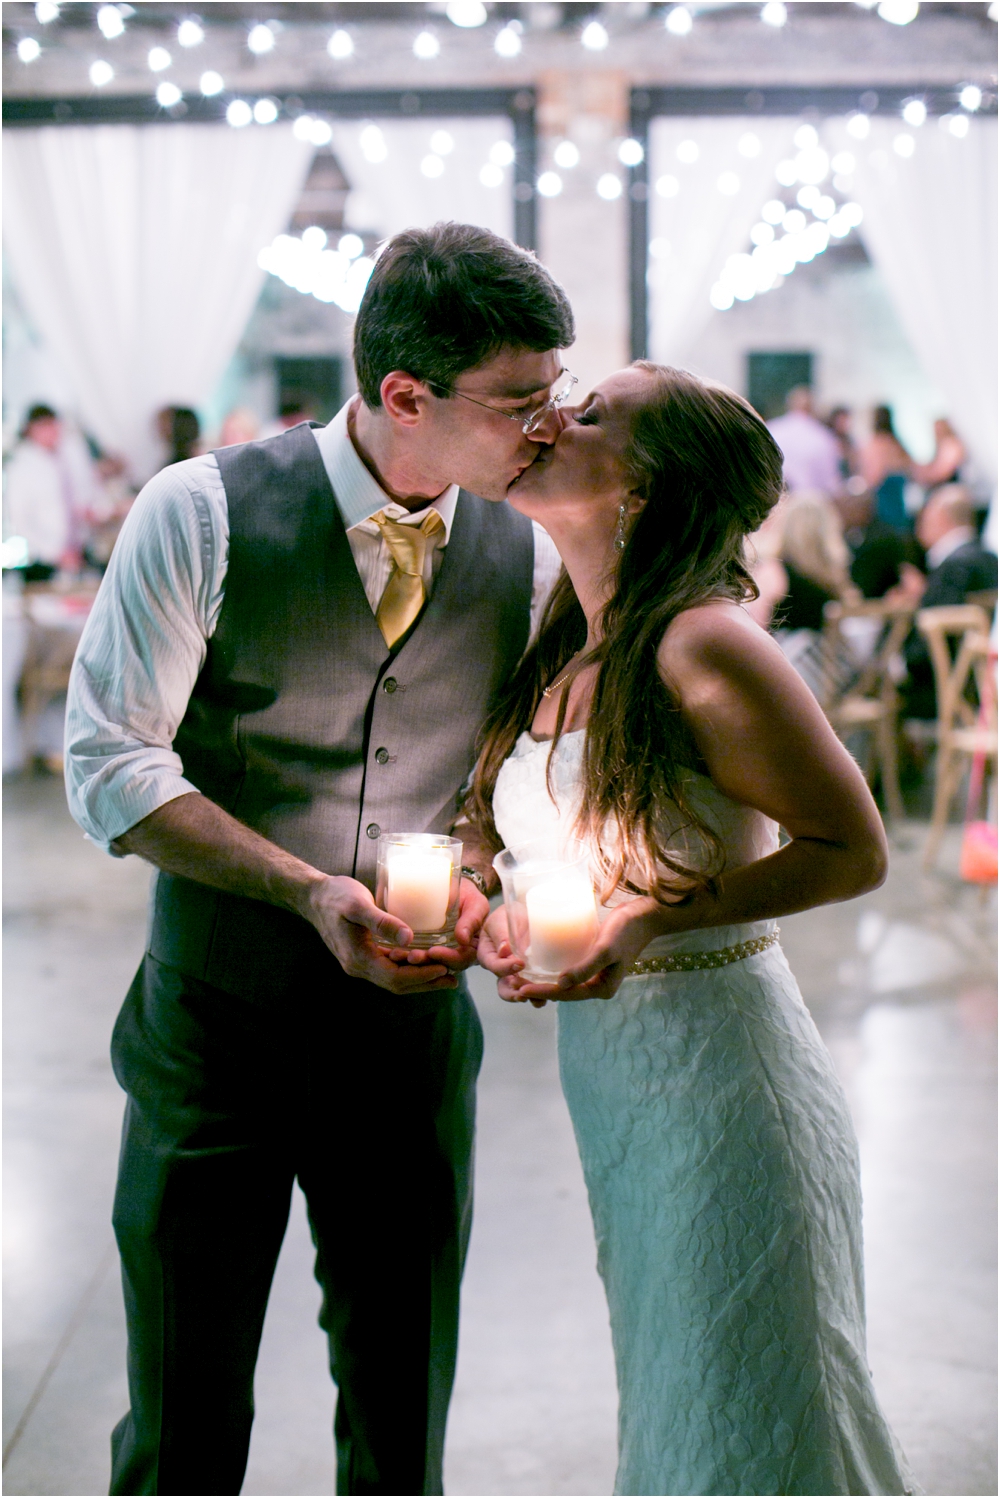 A Gold & White Inspired Mt Washington Mill Dye House Jewish Wedding | Living Radiant Photography | Michael Kors & Kate Spade Wedding